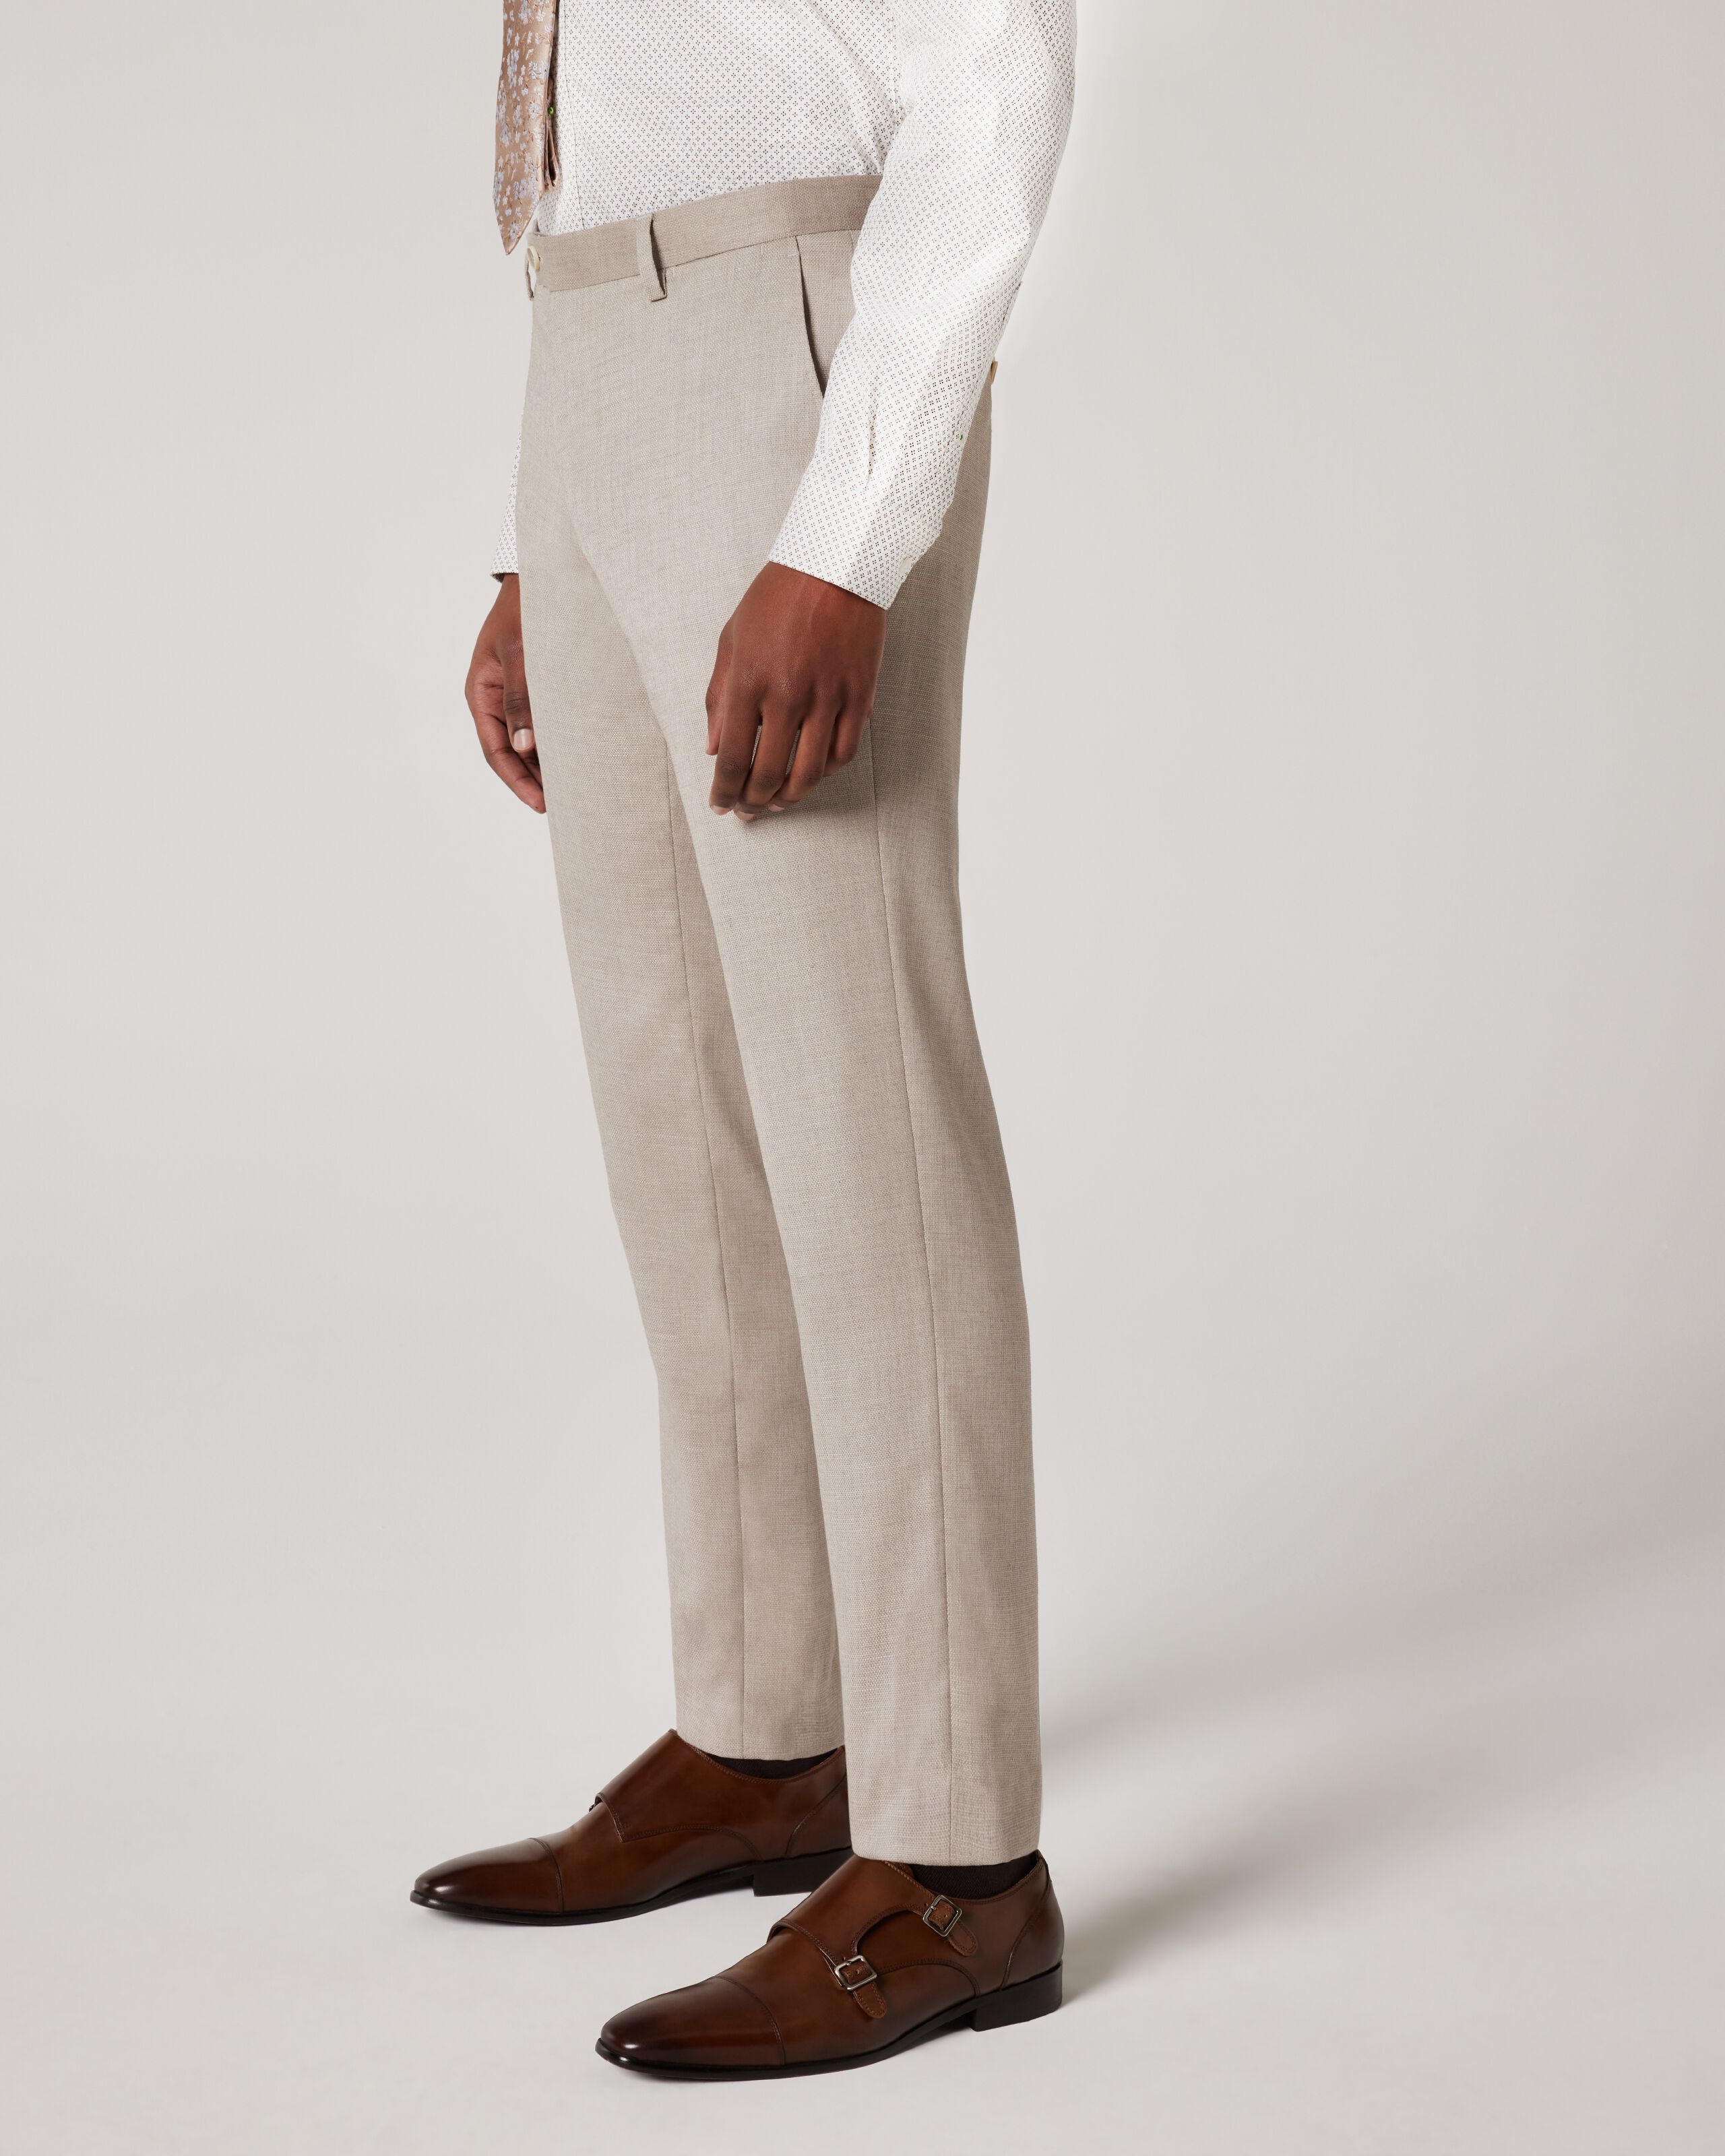 Skinny Fit Navy Suit Pants | Calvin Klein® USA